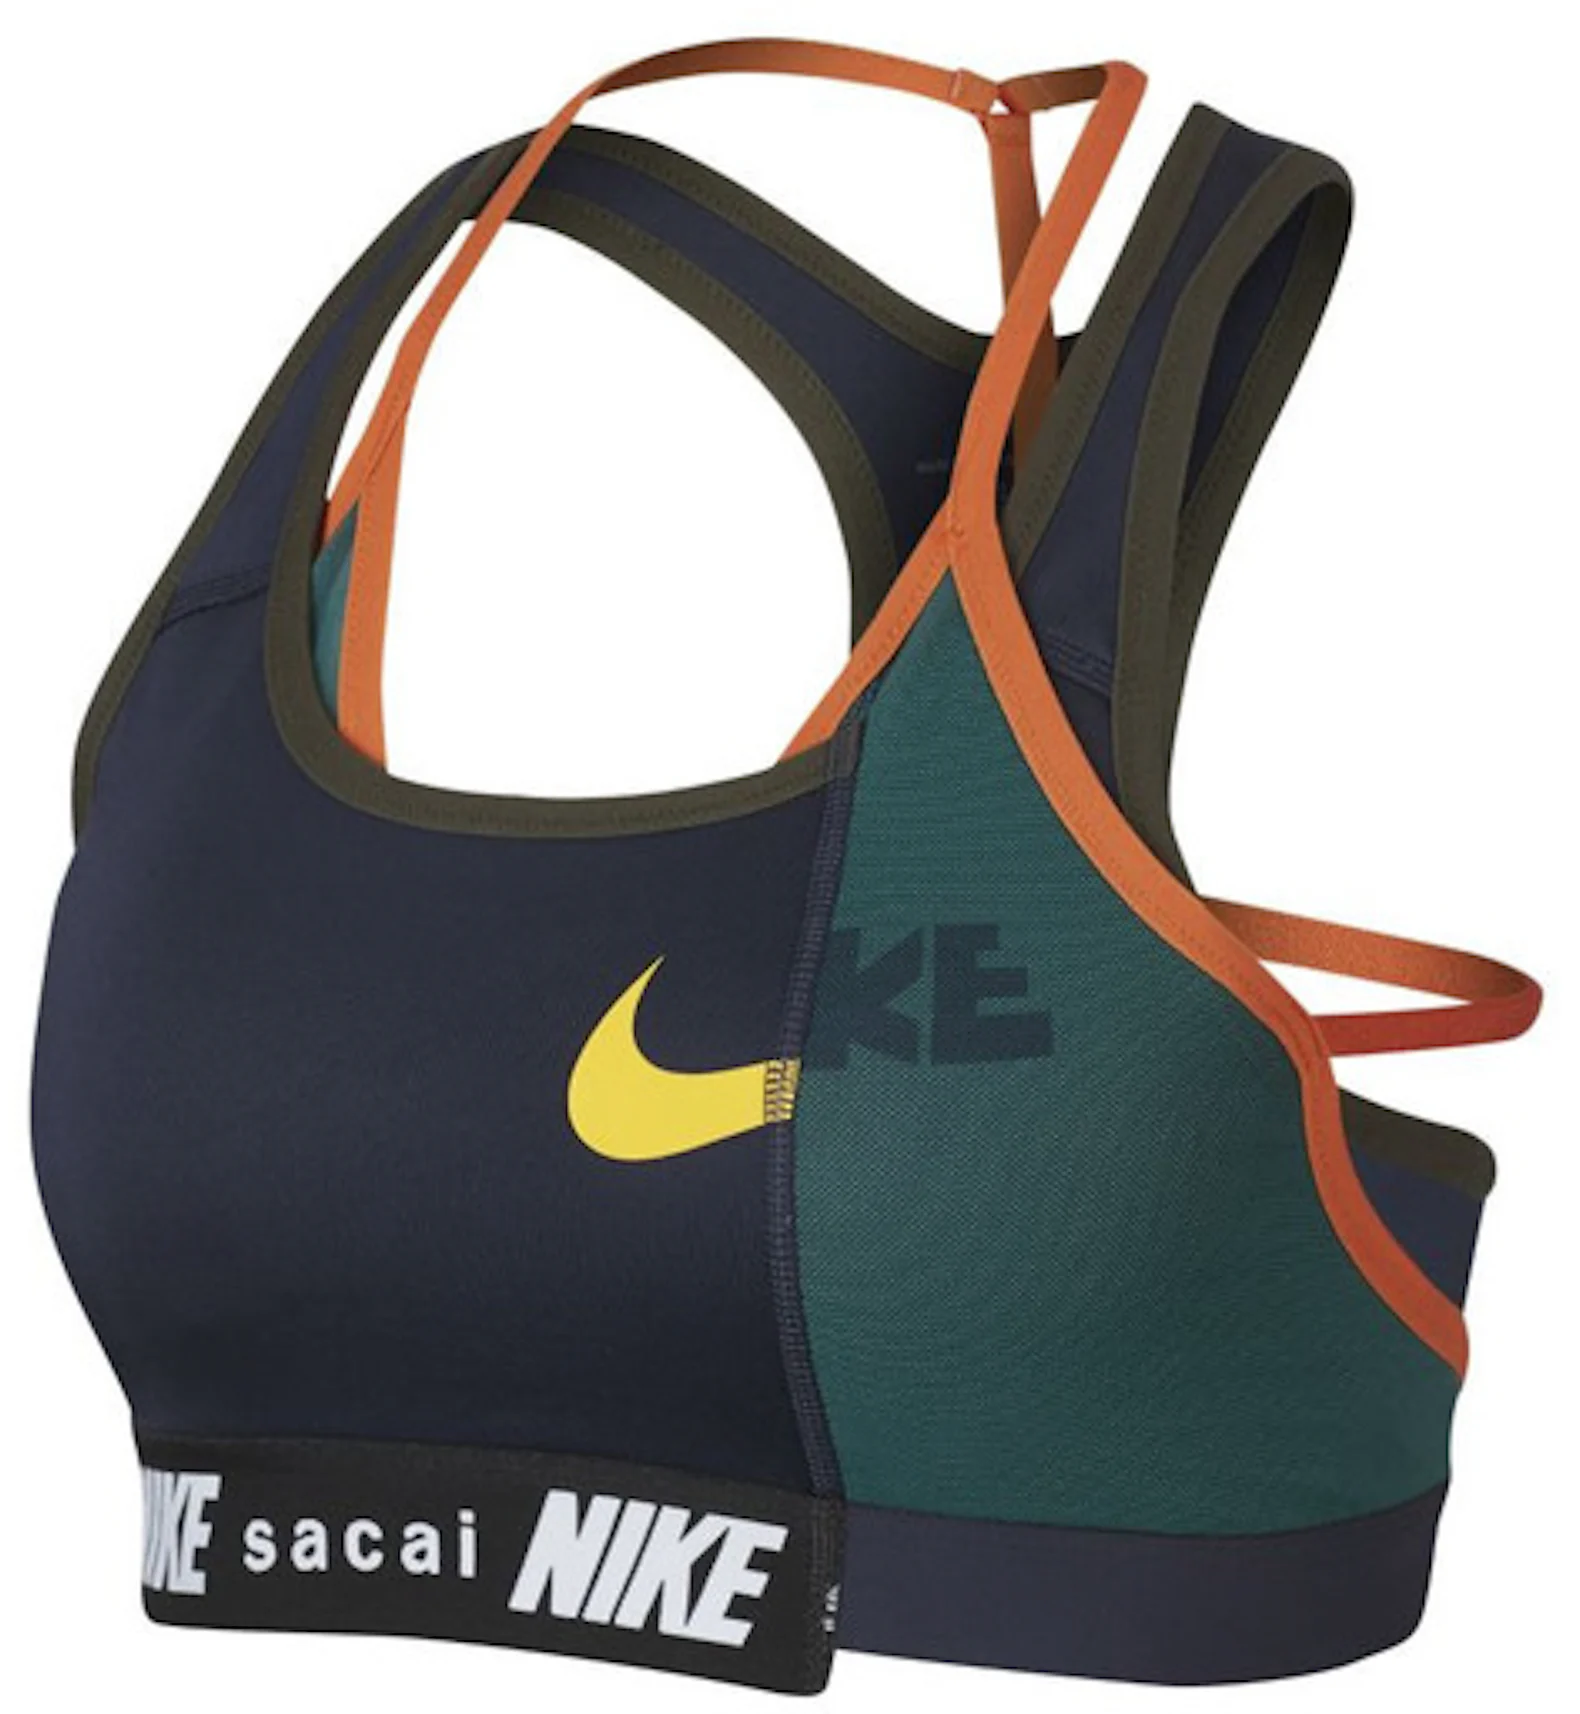 Nike women's sports bra, Navy green, Size Small